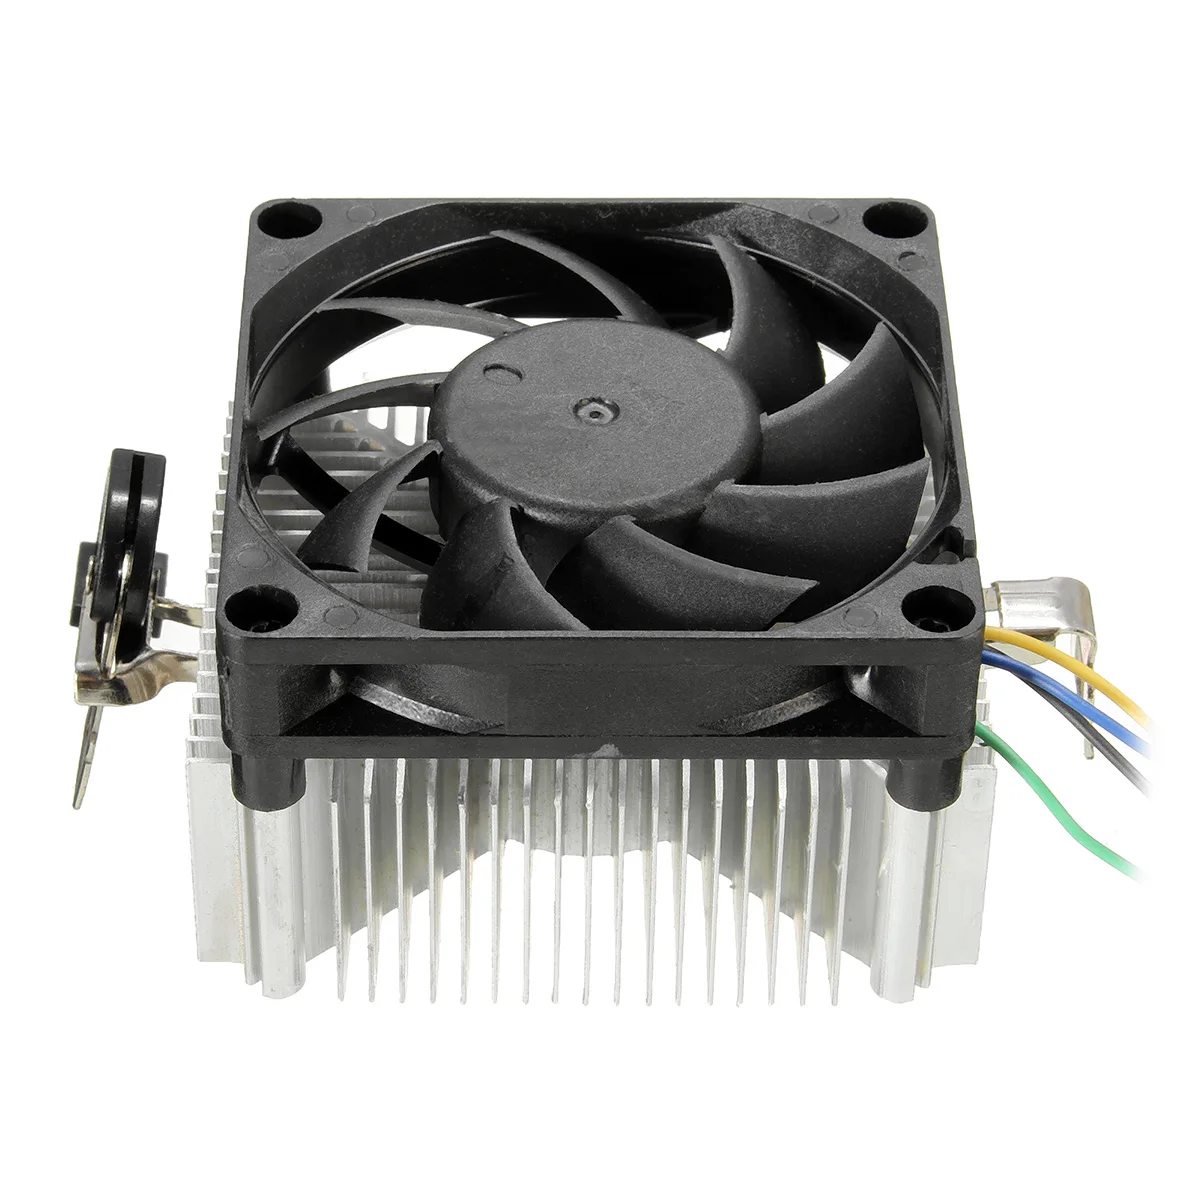 4Pin CPU Cooler Cooling Fan & Heatsink For AMD Socket AM2 AM3 1A02C3W00 95W ! 